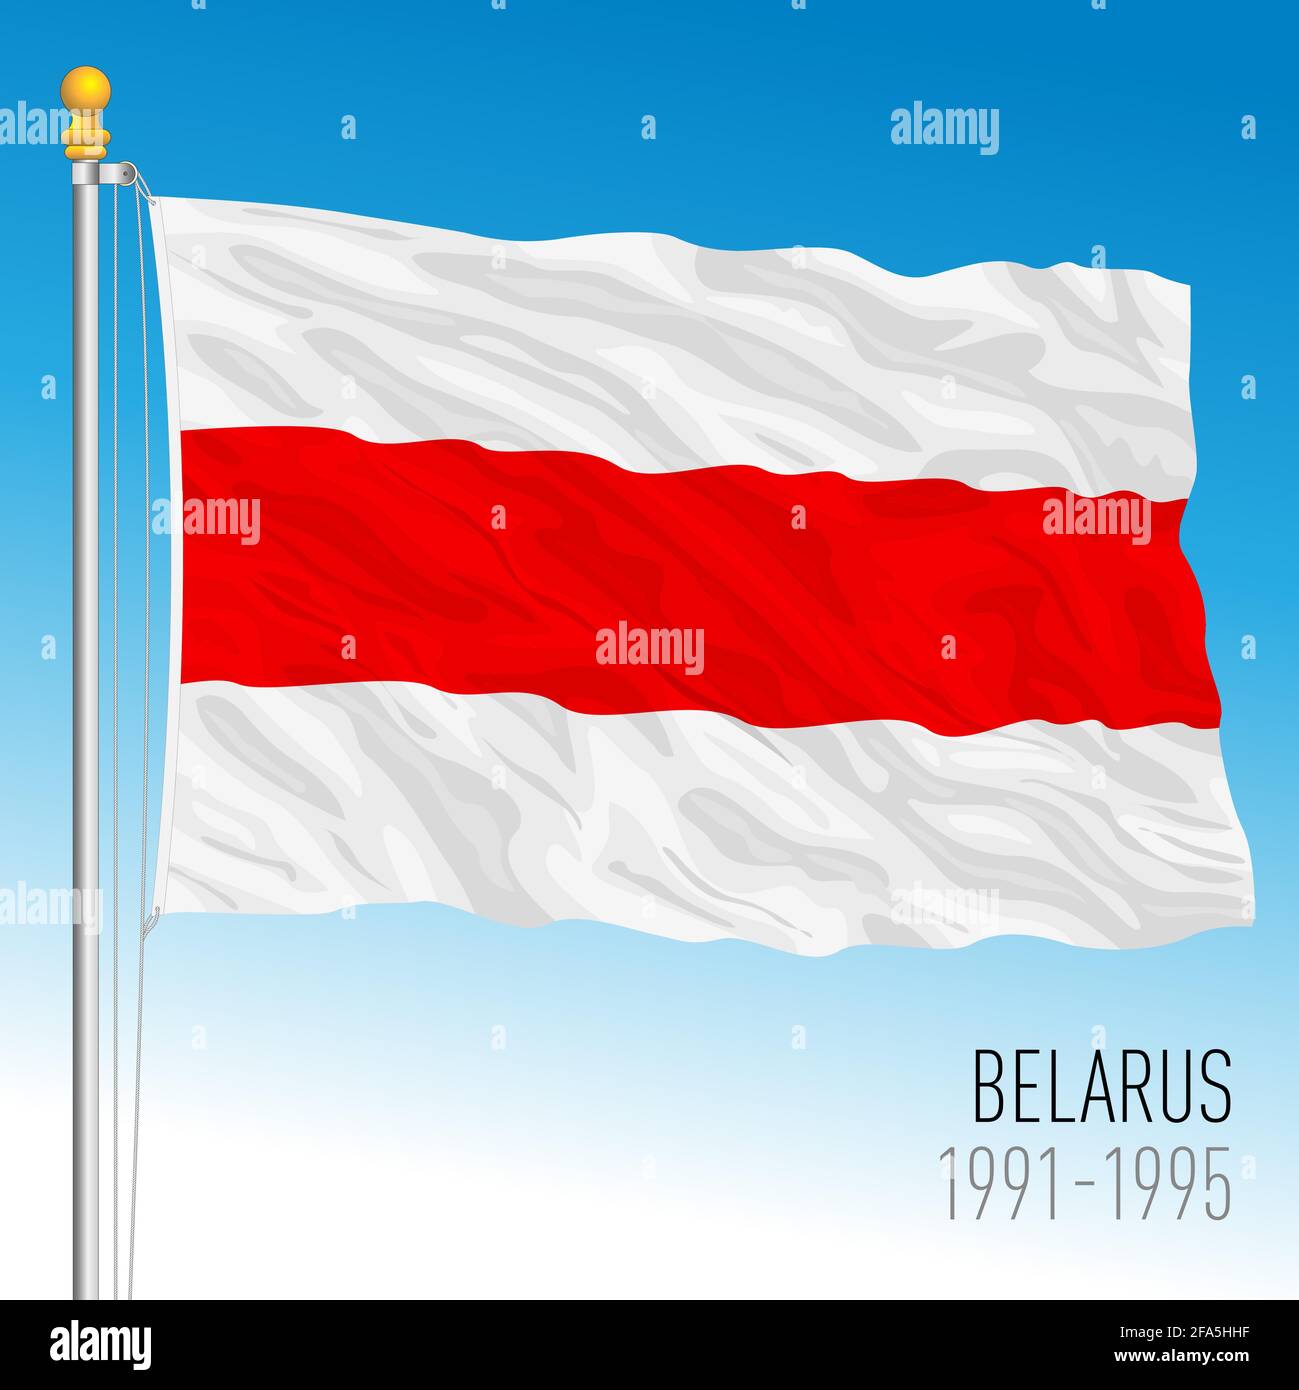 Belarus historical flag, 1991 - 1995, vector illustration Stock Vector